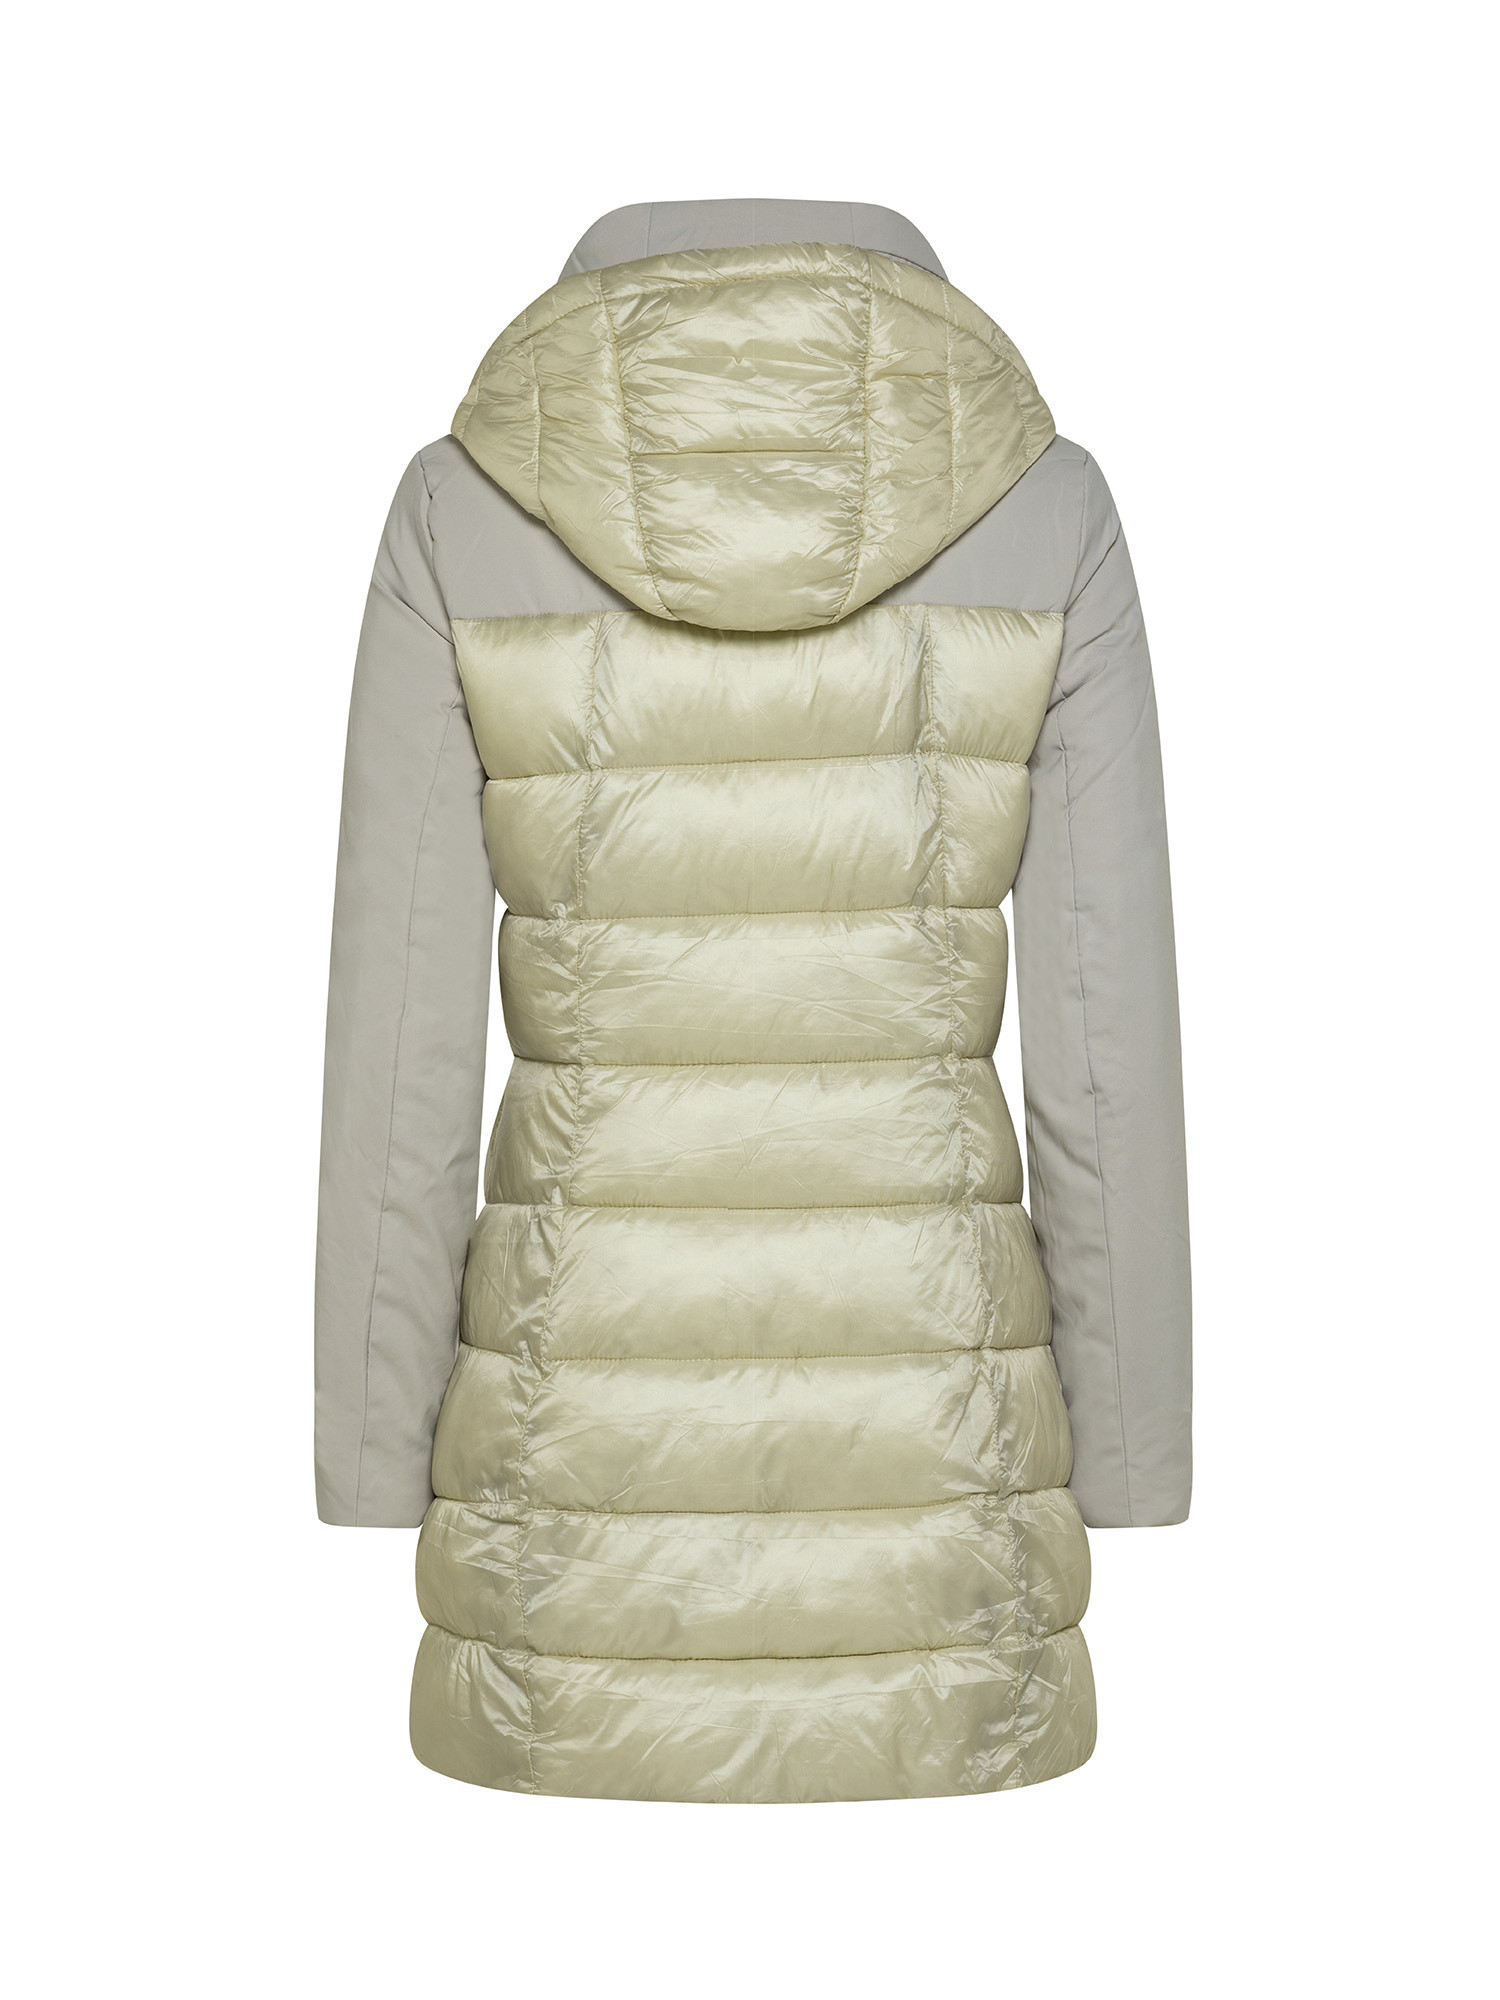 Koan - Hooded down jacket, White, large image number 1